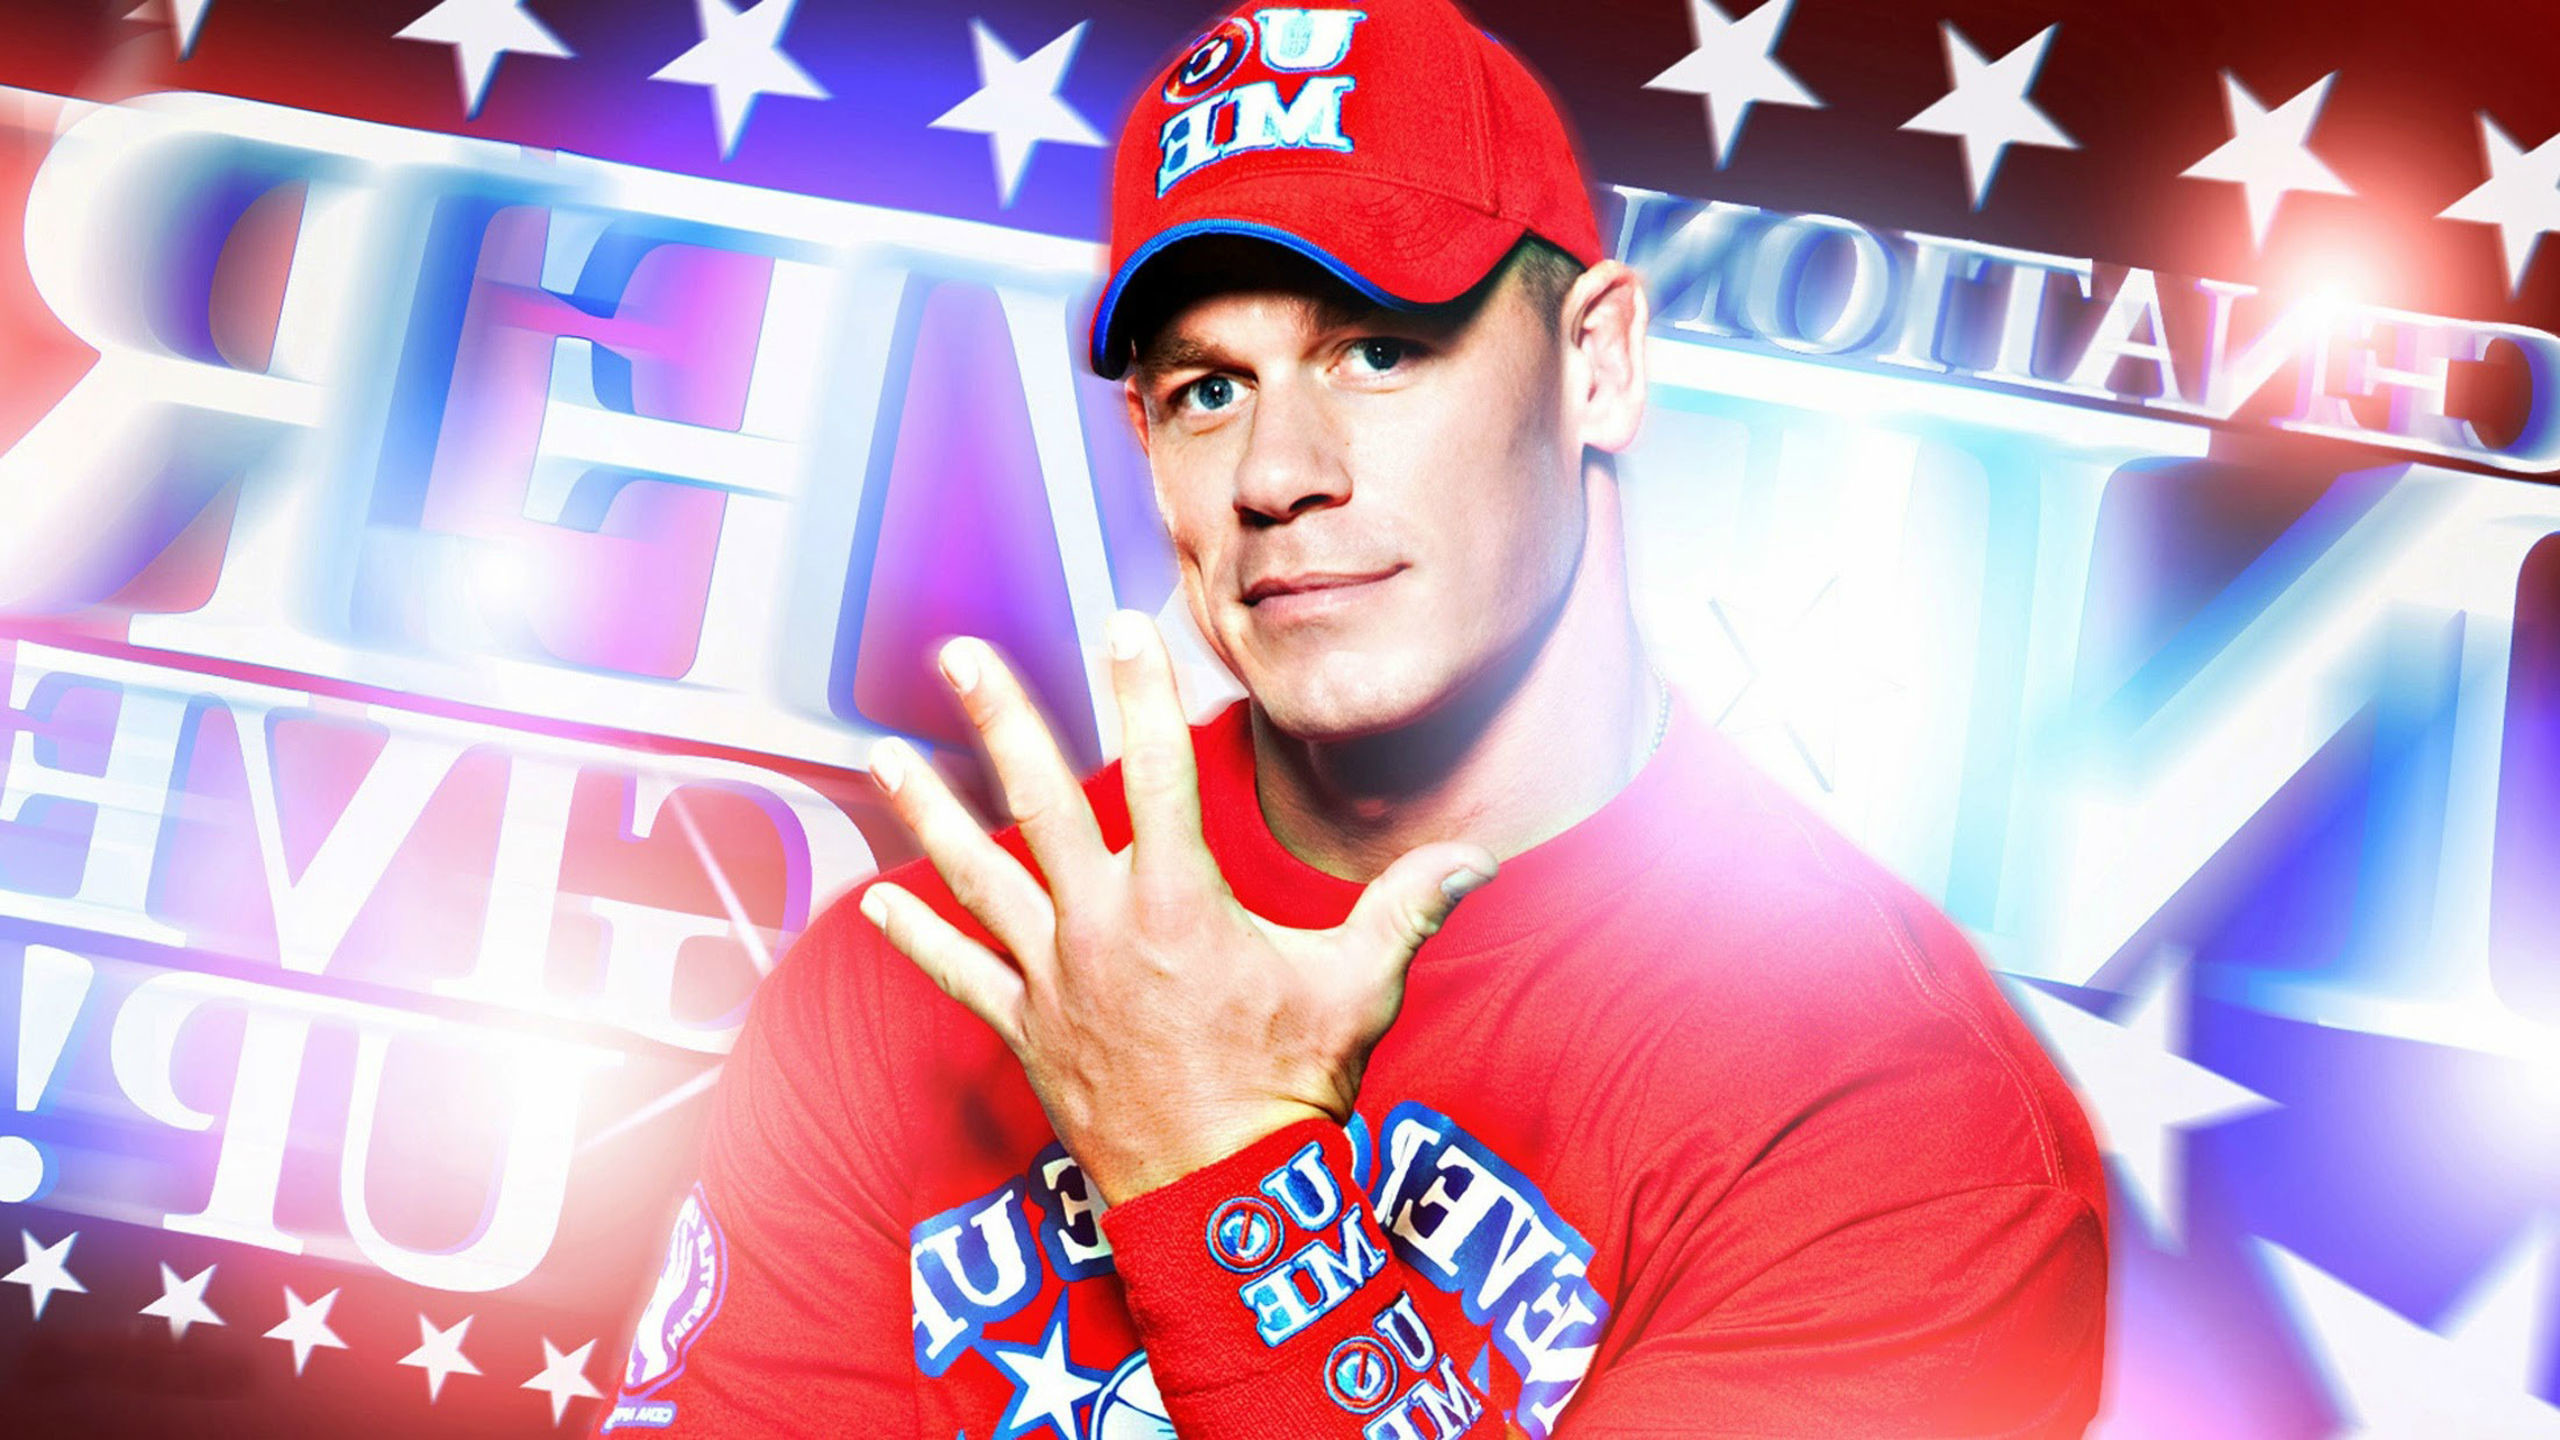 John Cena Hd Free Wallpapers | WWE HD WALLPAPER FREE DOWNLOAD | John cena,  Wwe superstar john cena, John cena wwe champion